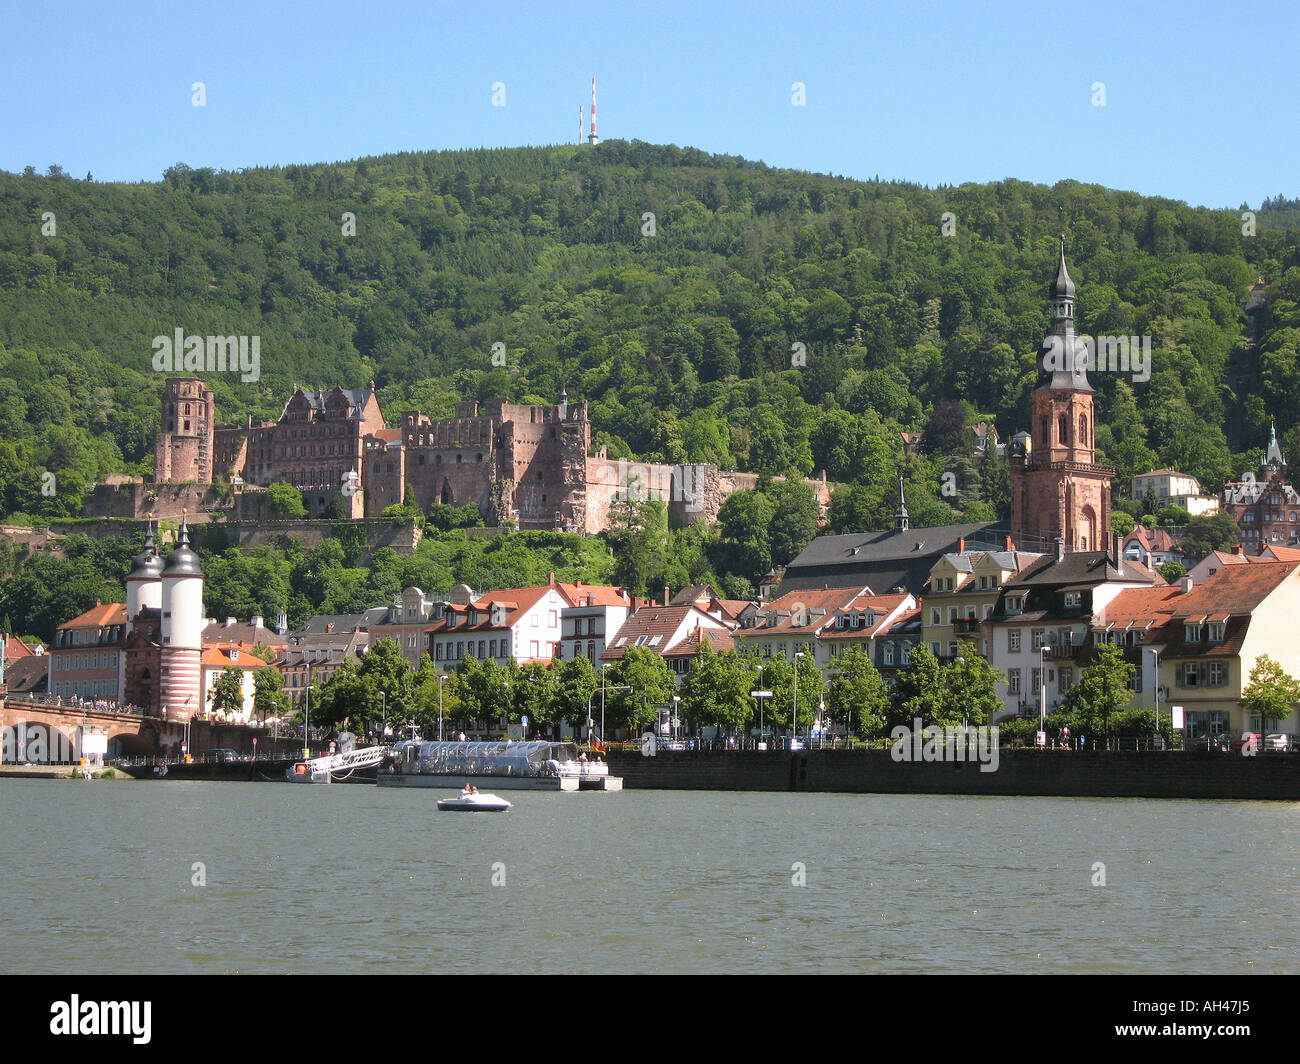 Castello di Heidelberg Heidelberger Schloss Foto Stock